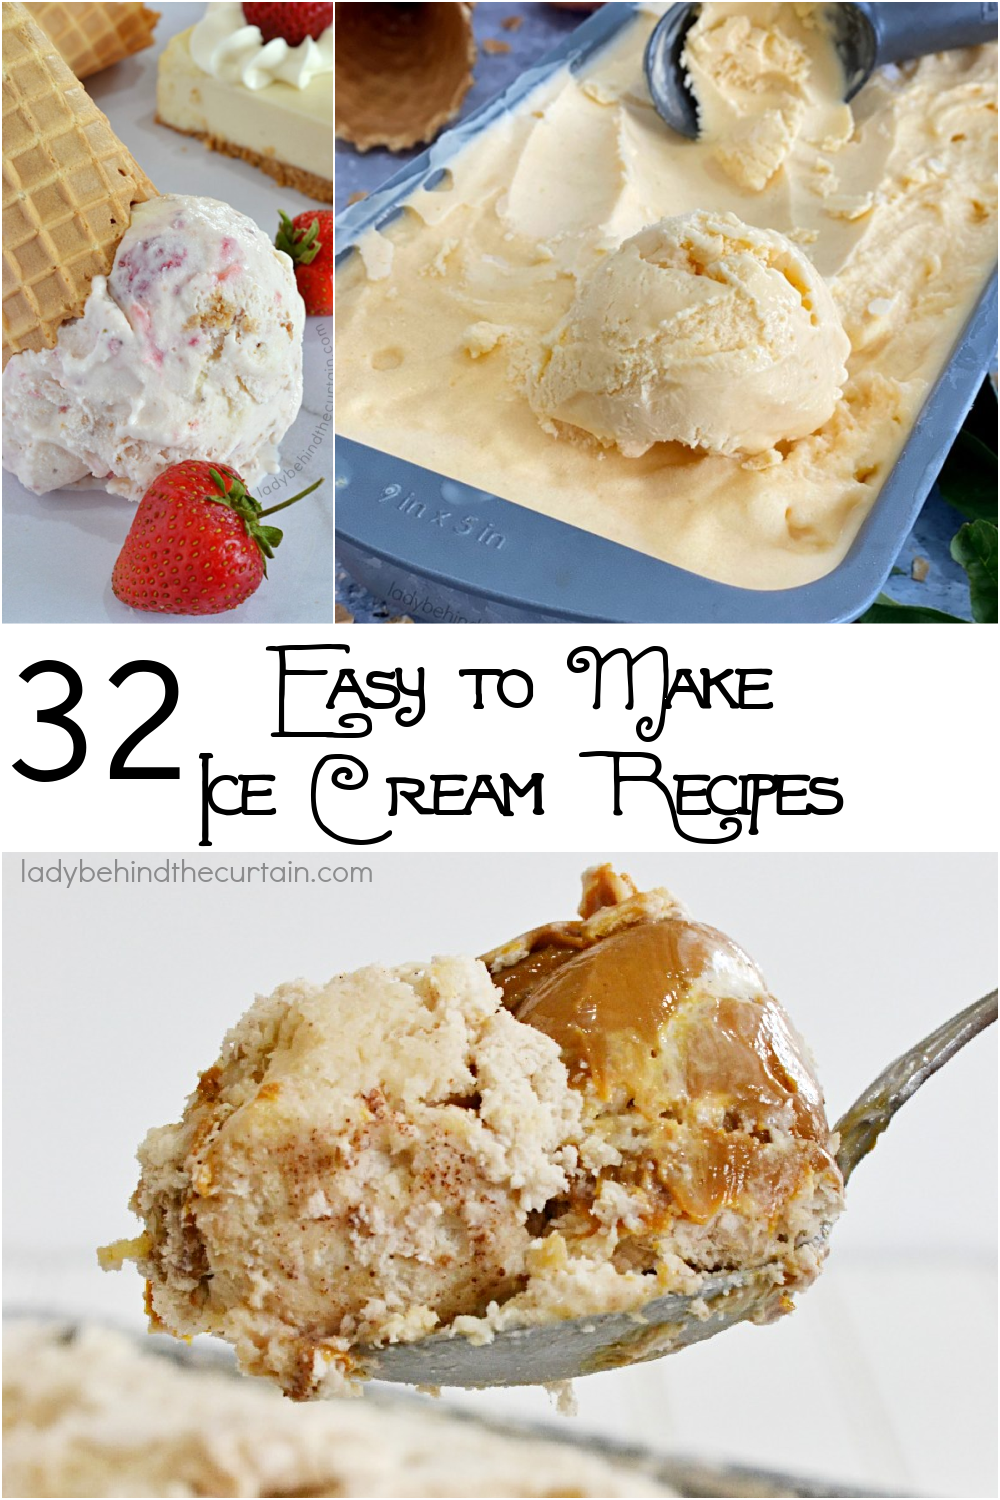 32 Easy to make Ice Cream Recipes